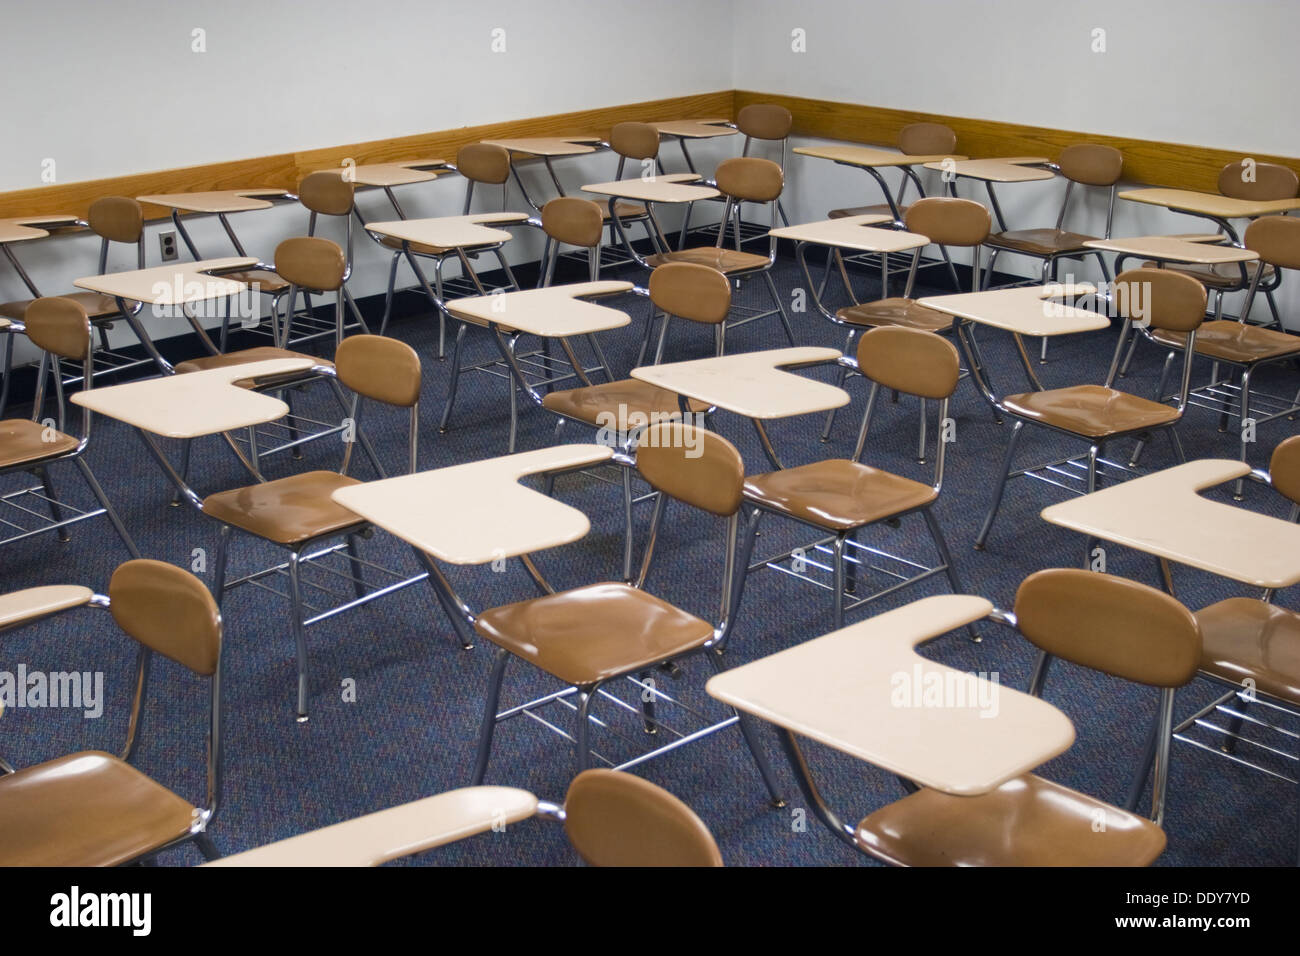 College Classroom With Empty Student Desks Stock Photo 60220593